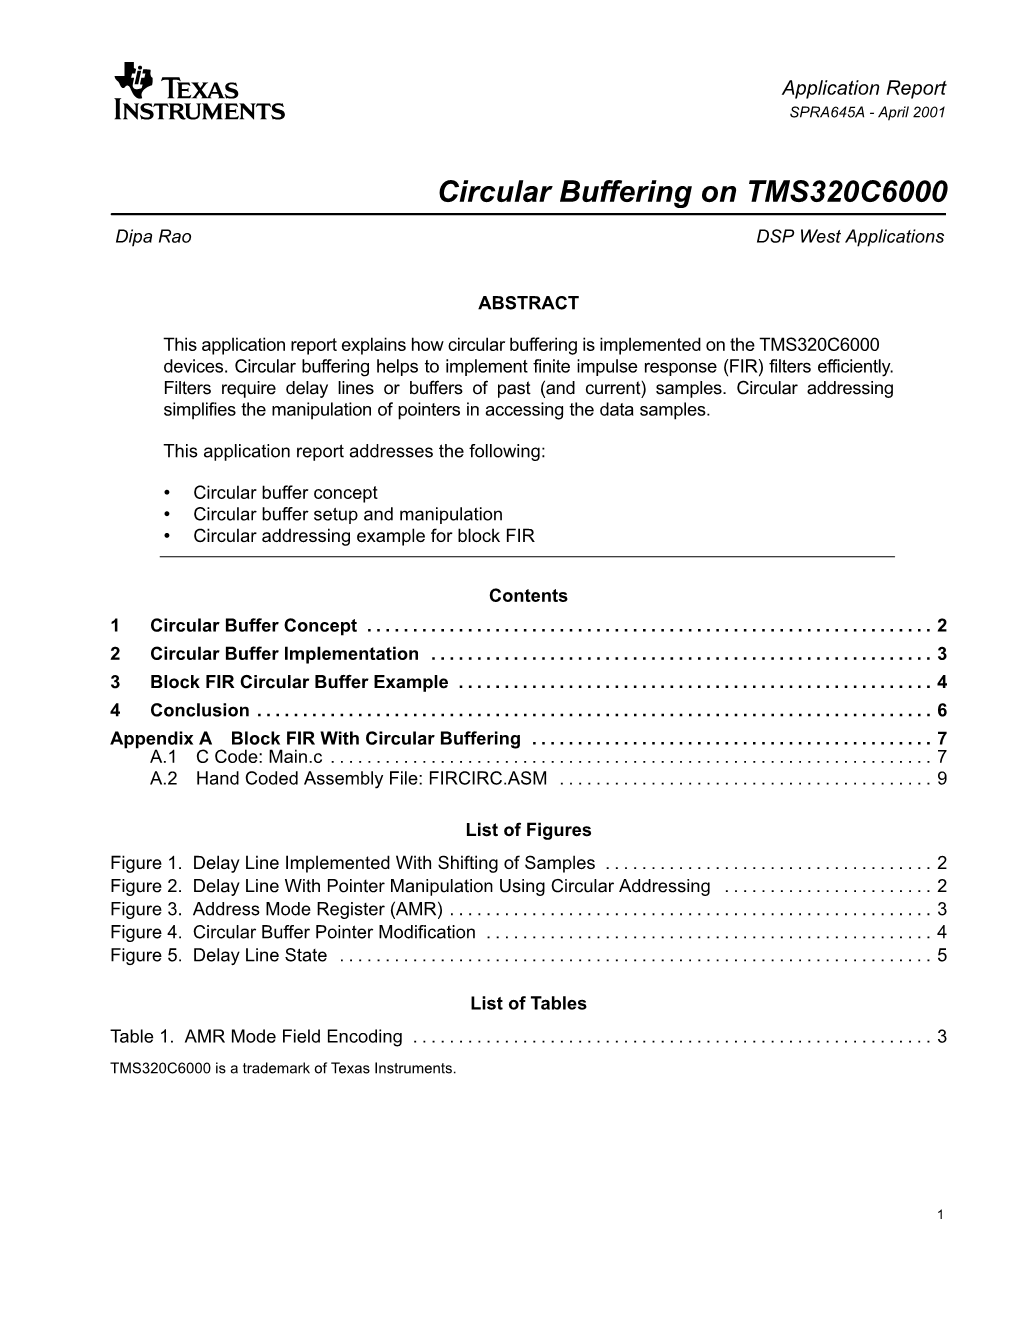 Circular Buffering on TMS320C6000 (Rev. A)